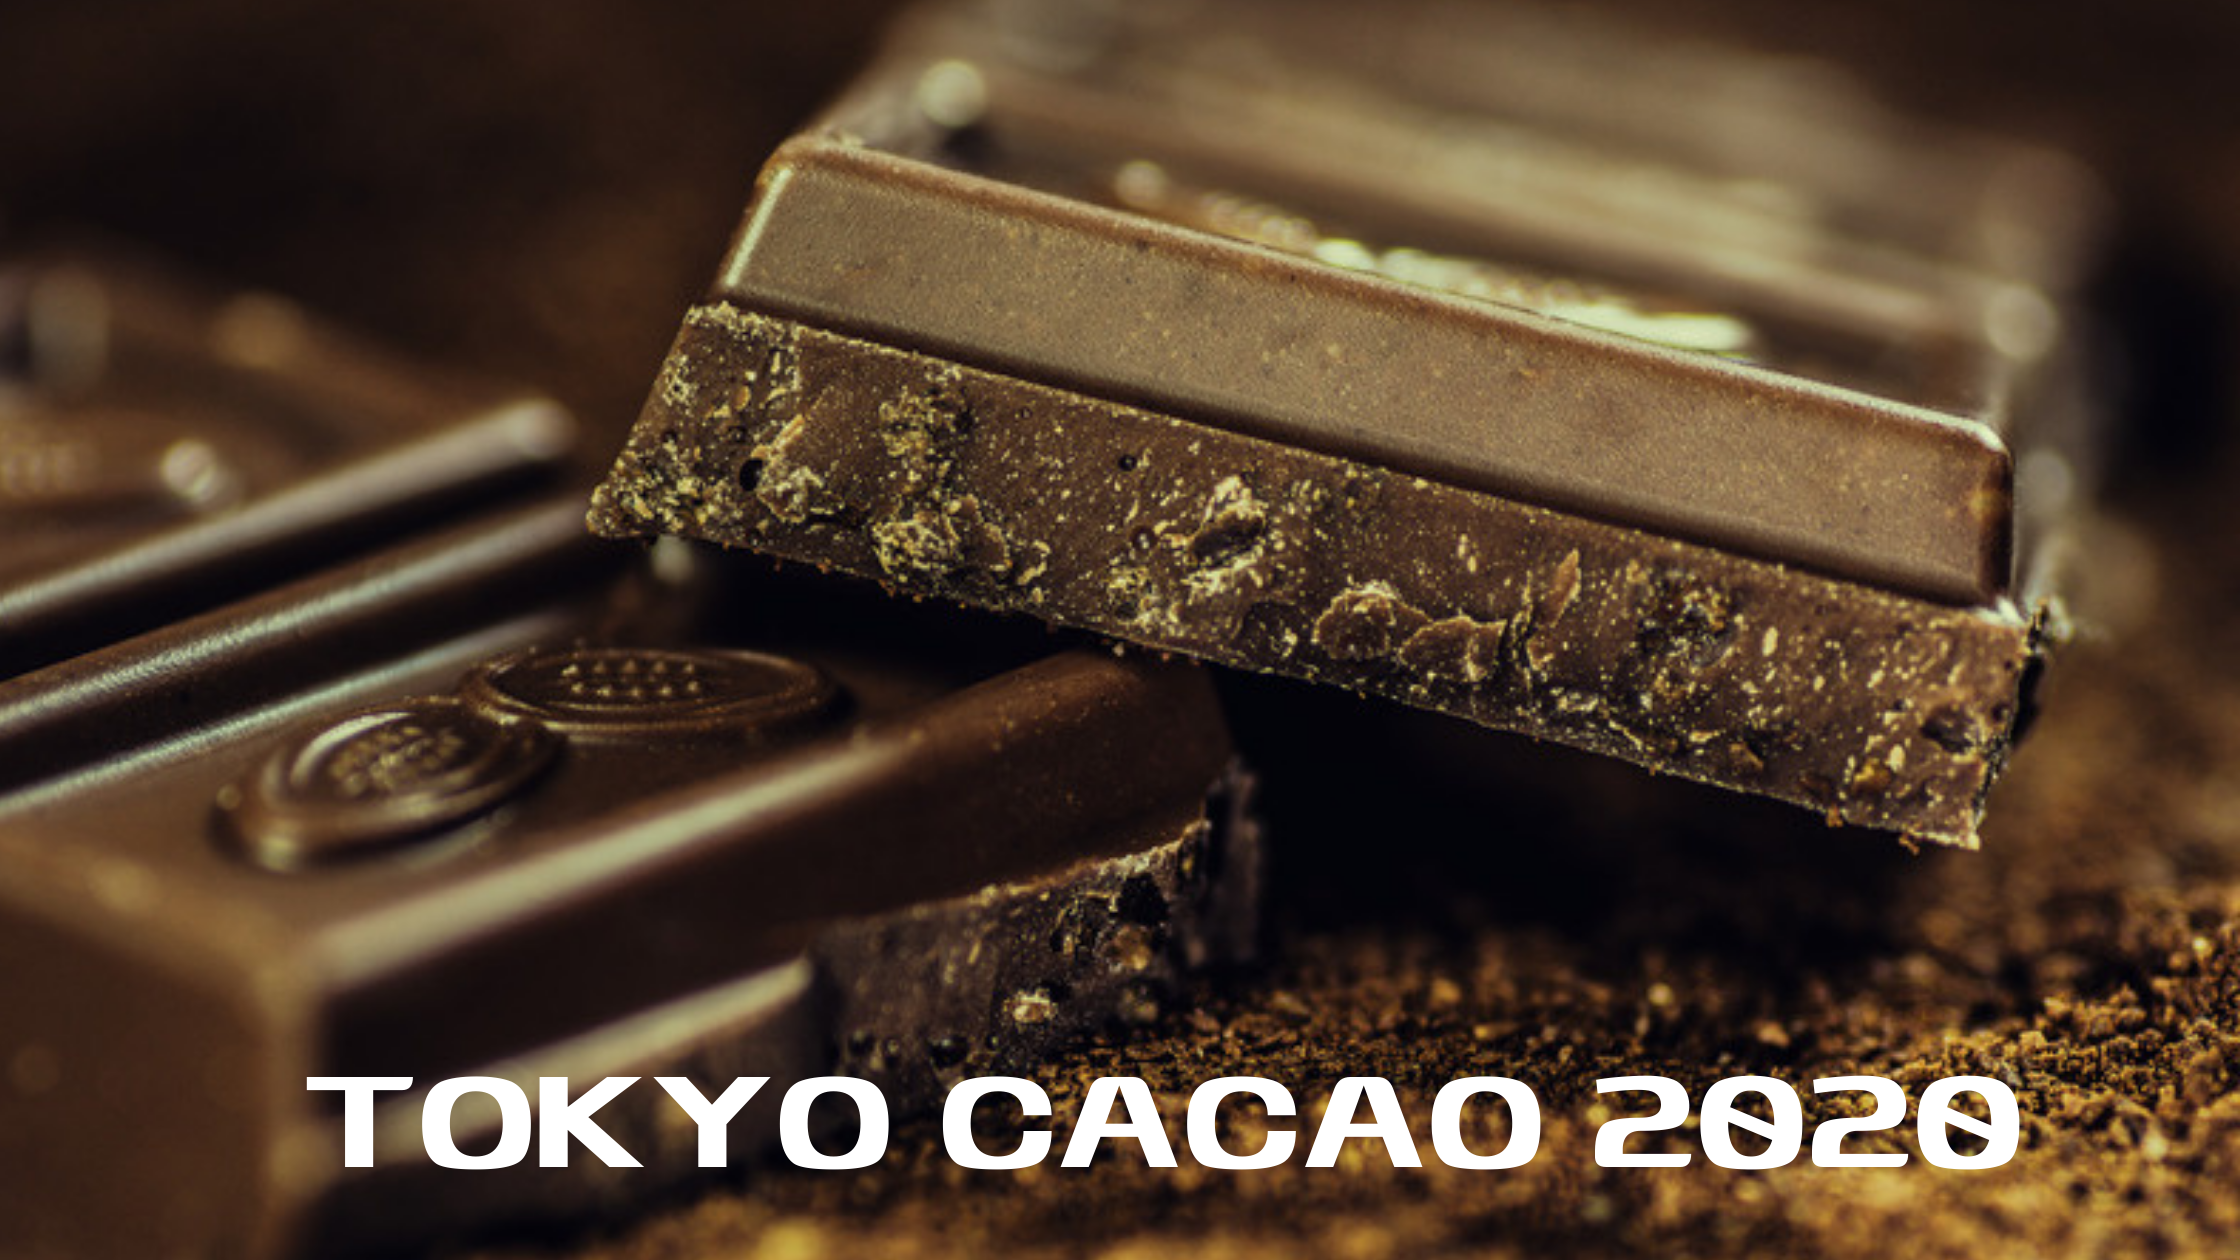 【TOKYO CACAO 2020】東京で採れたカカオを使い製品化に成功したチョコレート